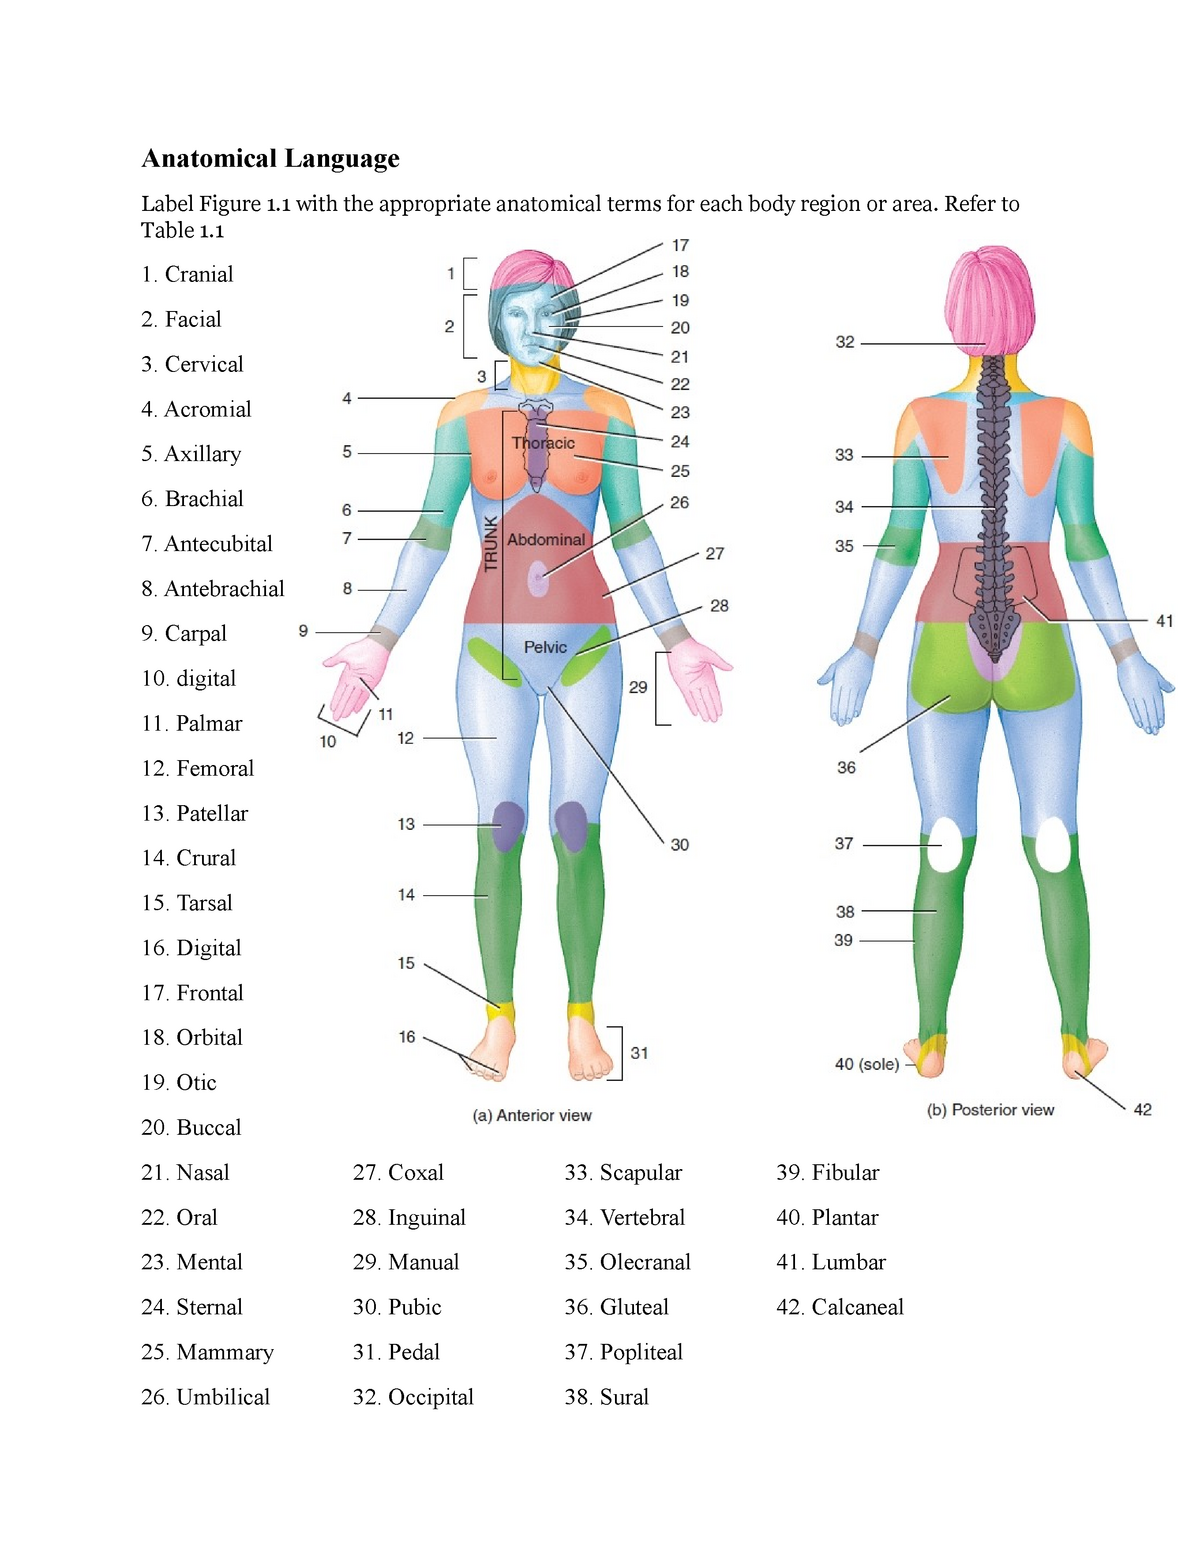 a-p-1-lab-exercise-1-lab-worksheet-anatomical-language-label-figure